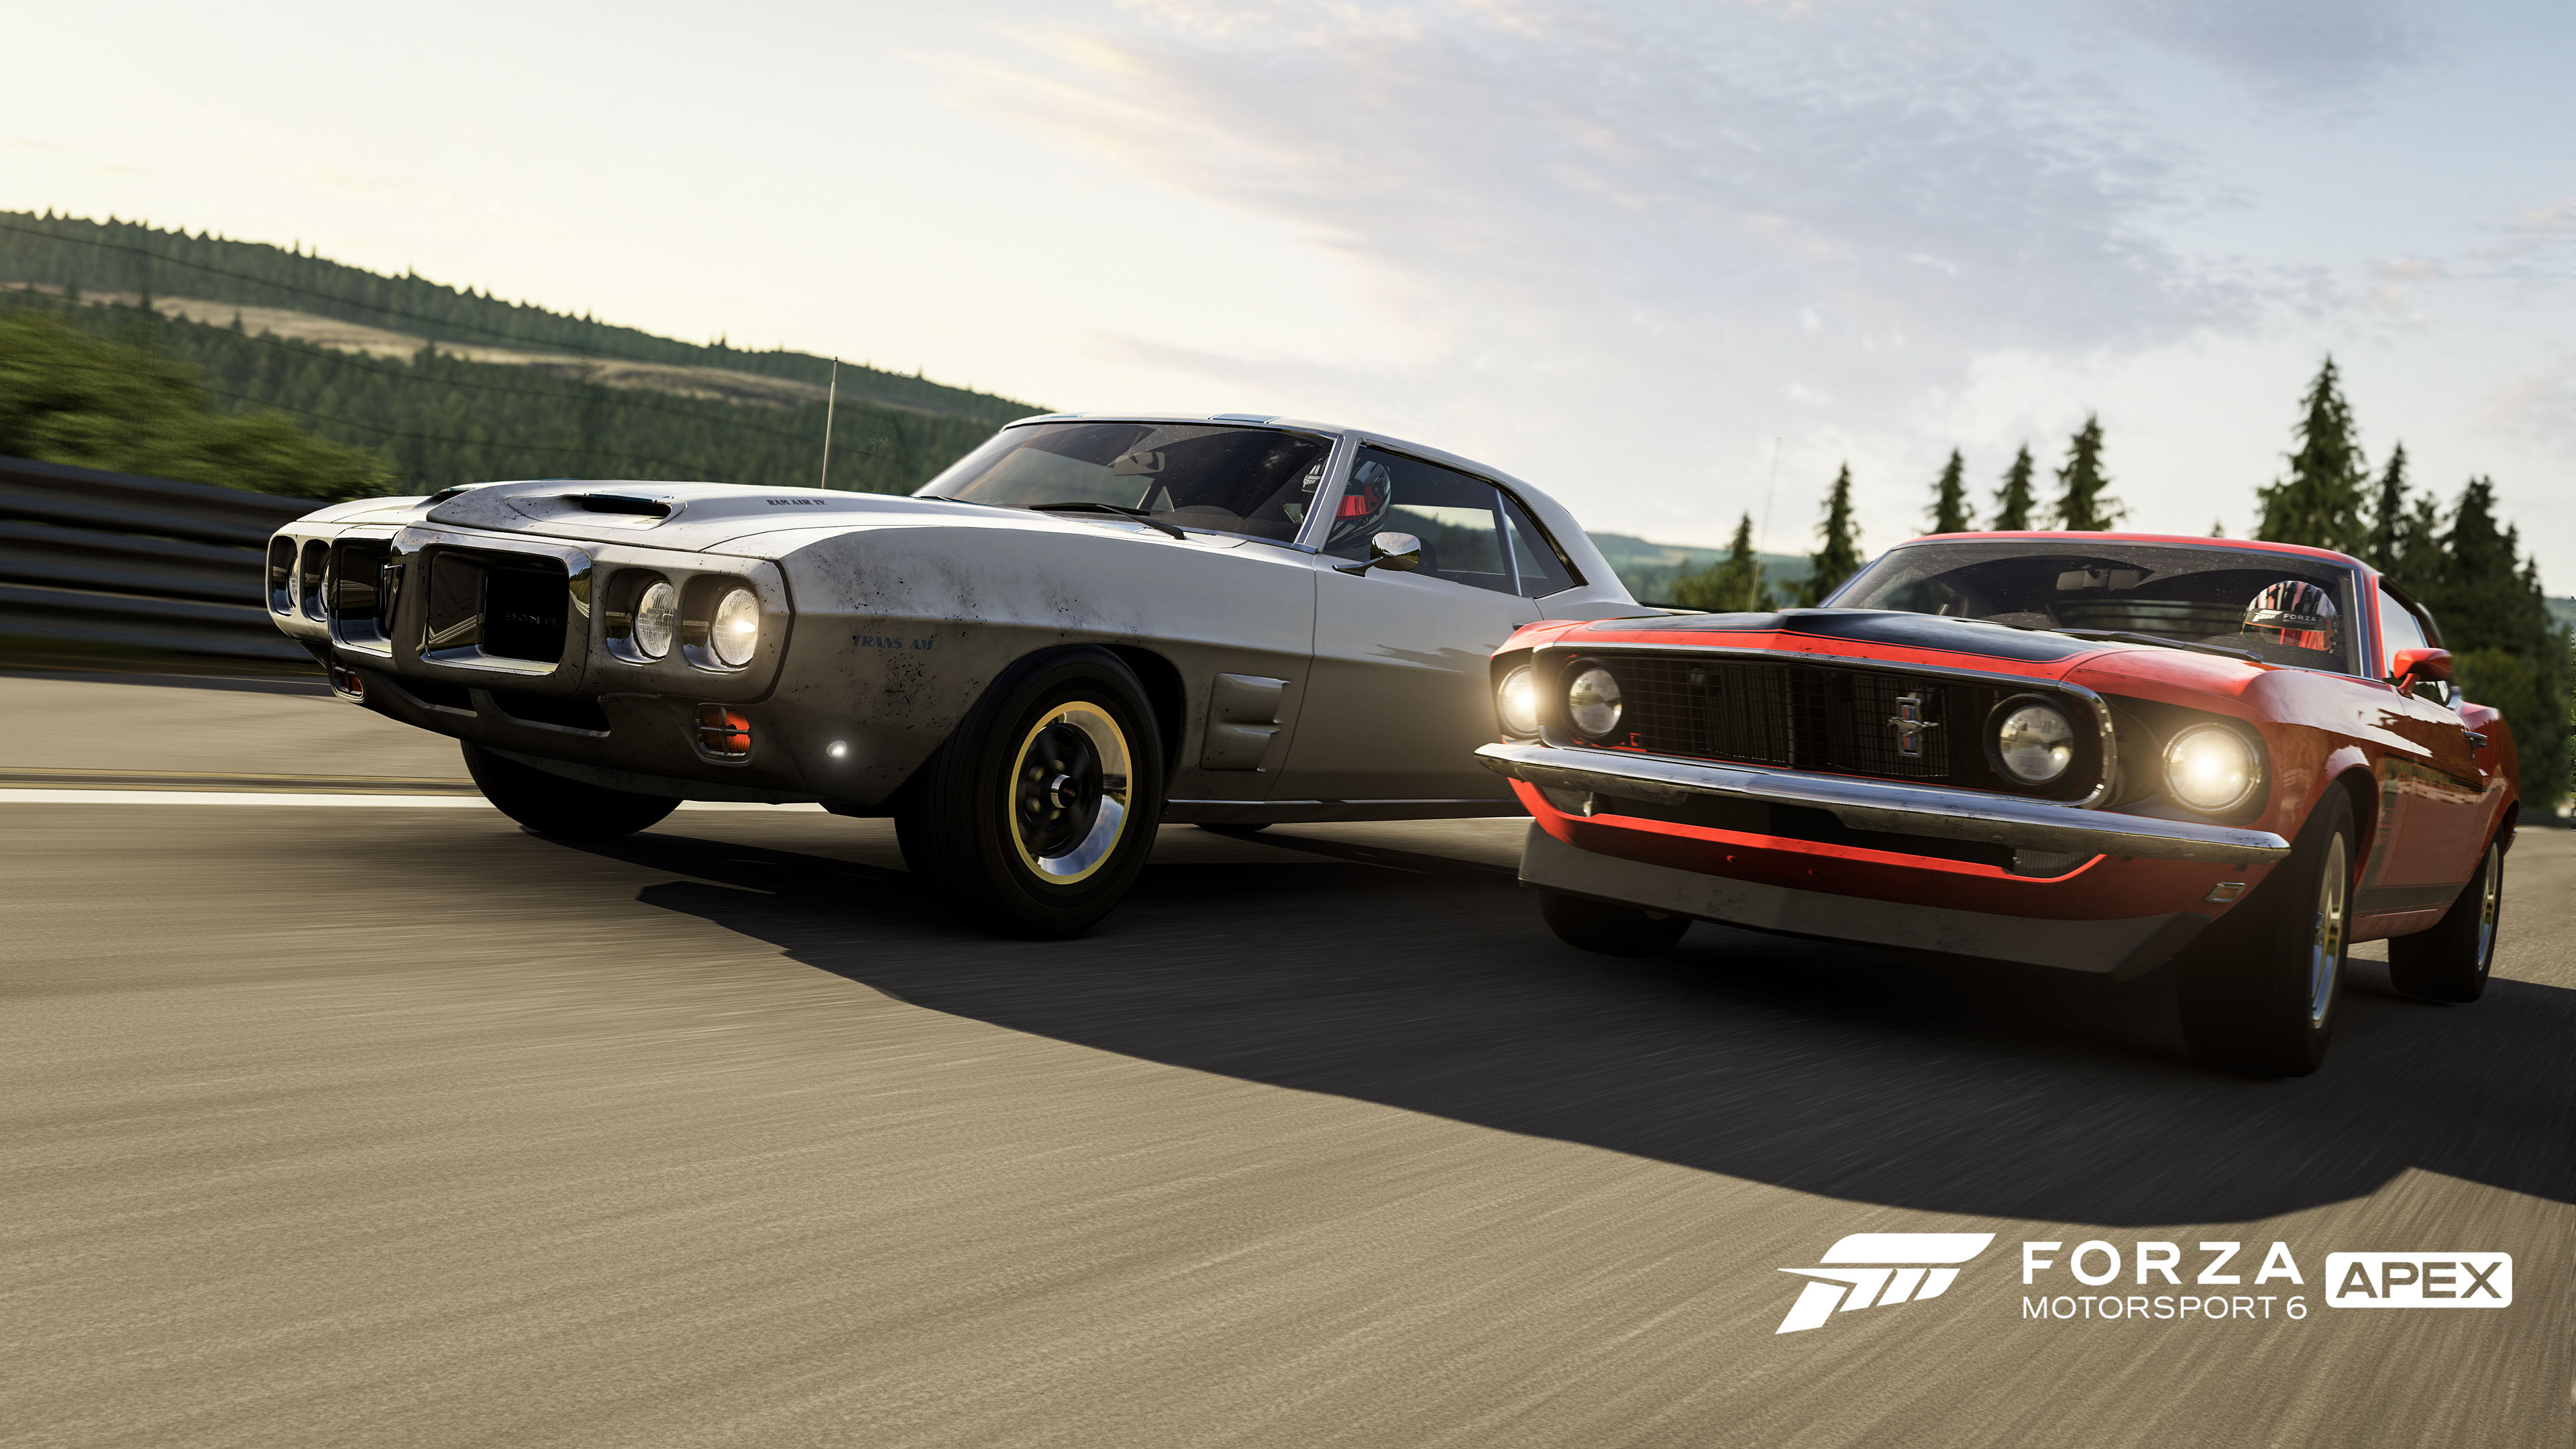 Forza Motorsport 6: Apex #11